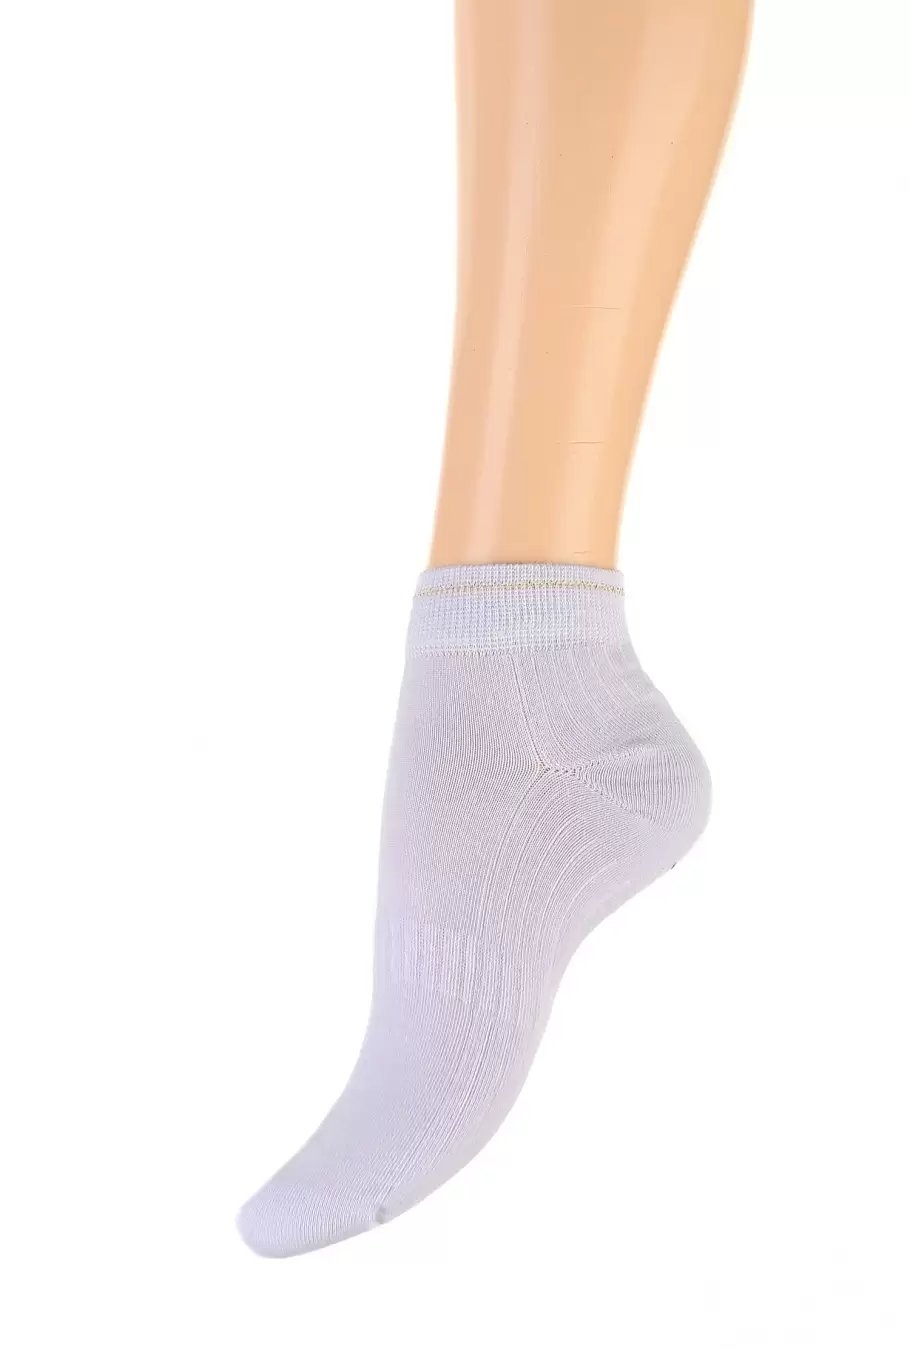 Pingons 7В41, женские носки (изображение 1)